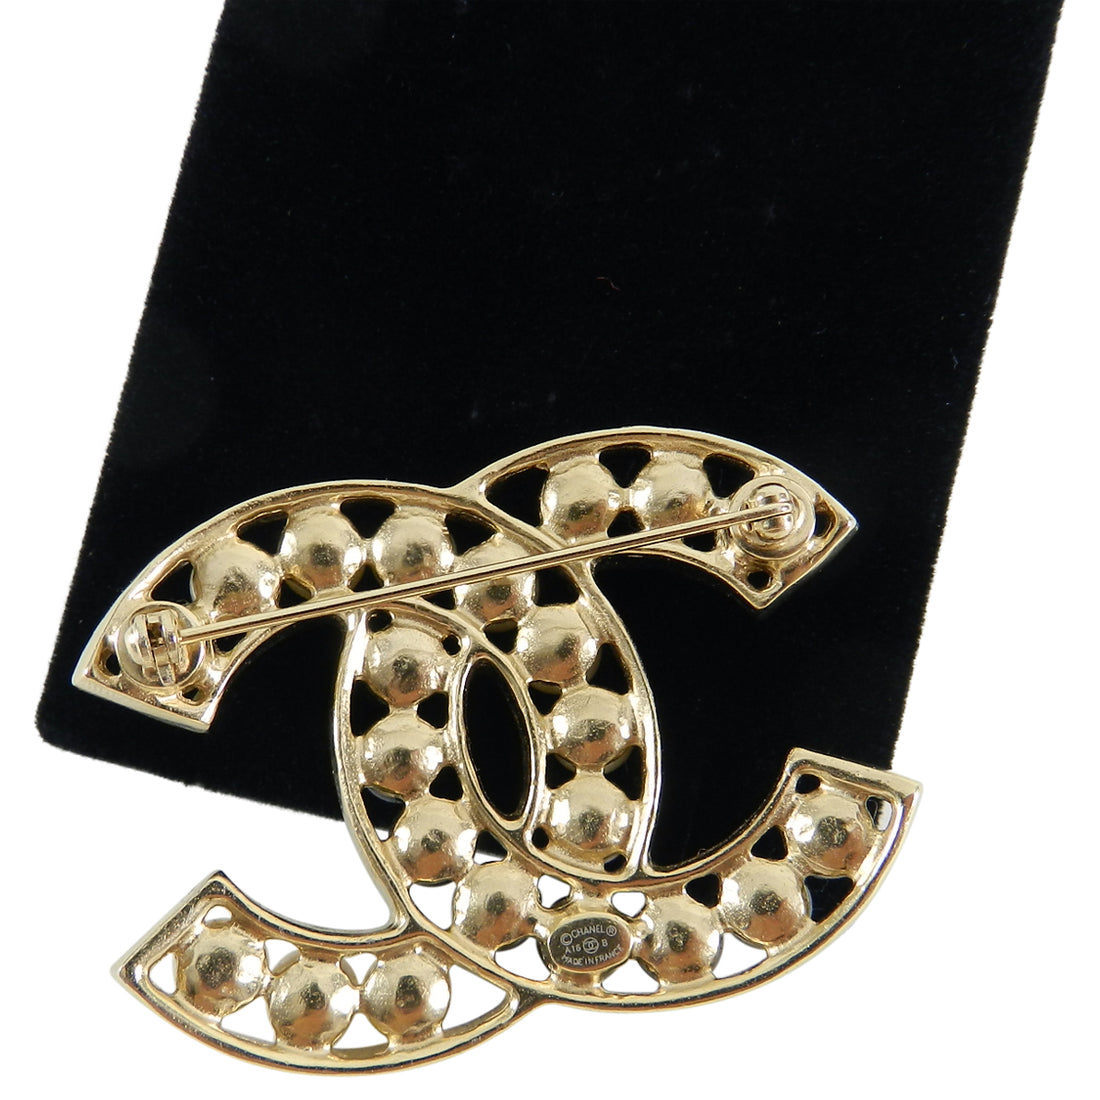 Cc pearl pin & brooche Chanel Gold in Pearl - 19601599